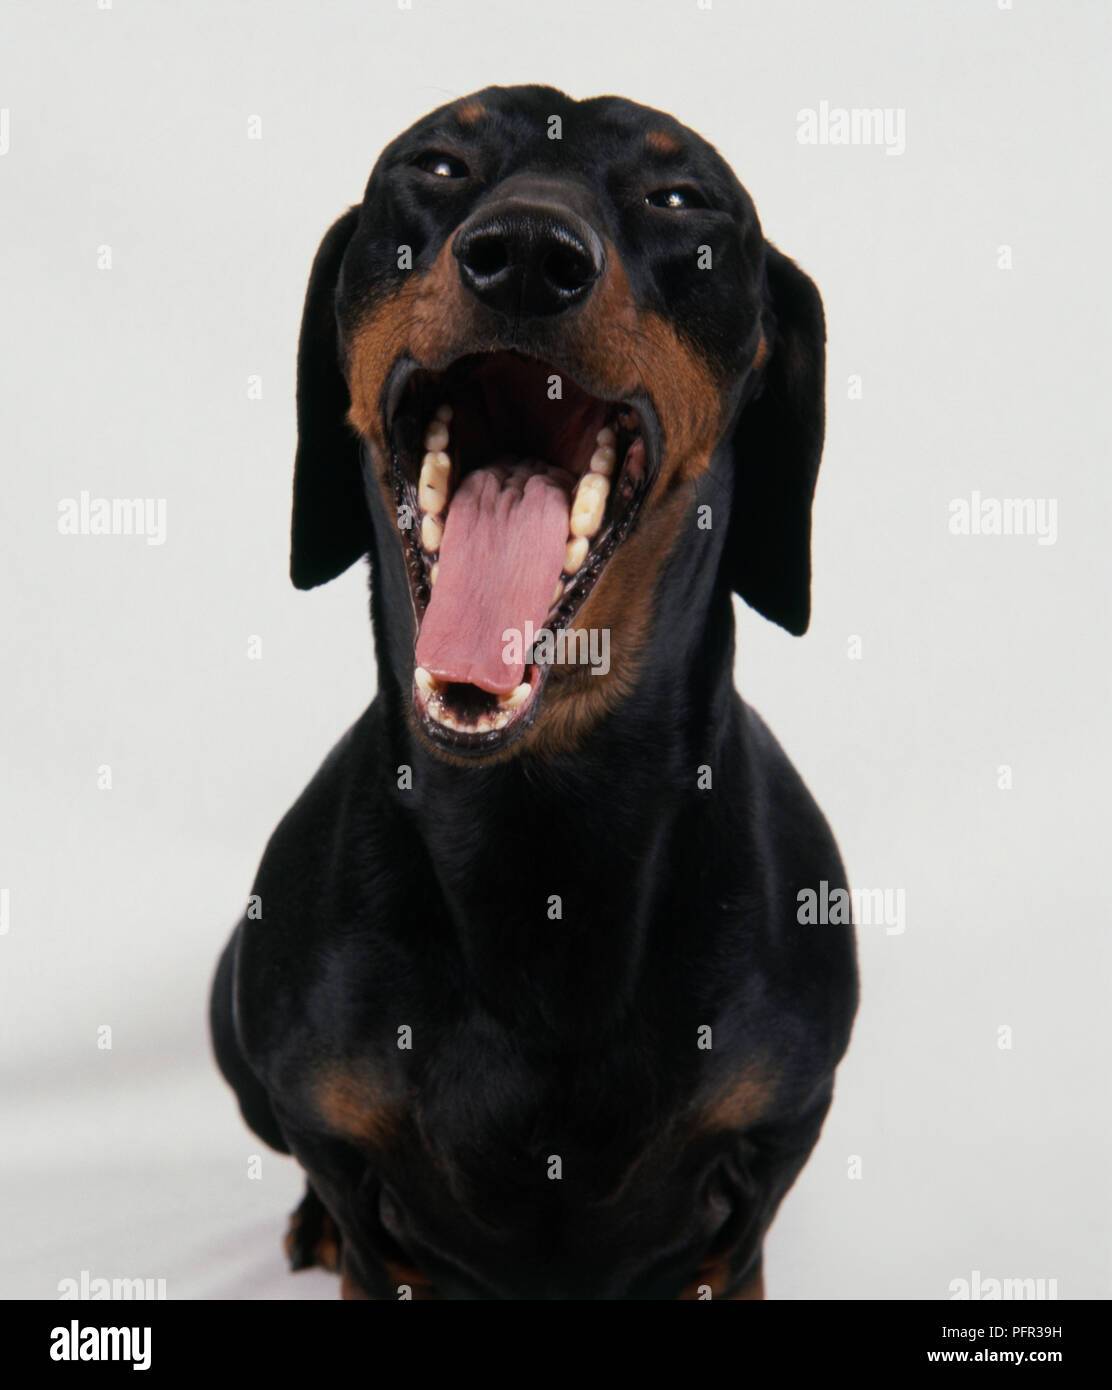 Black and tan Smooth-haired Dachshund dog yawning Stock Photo